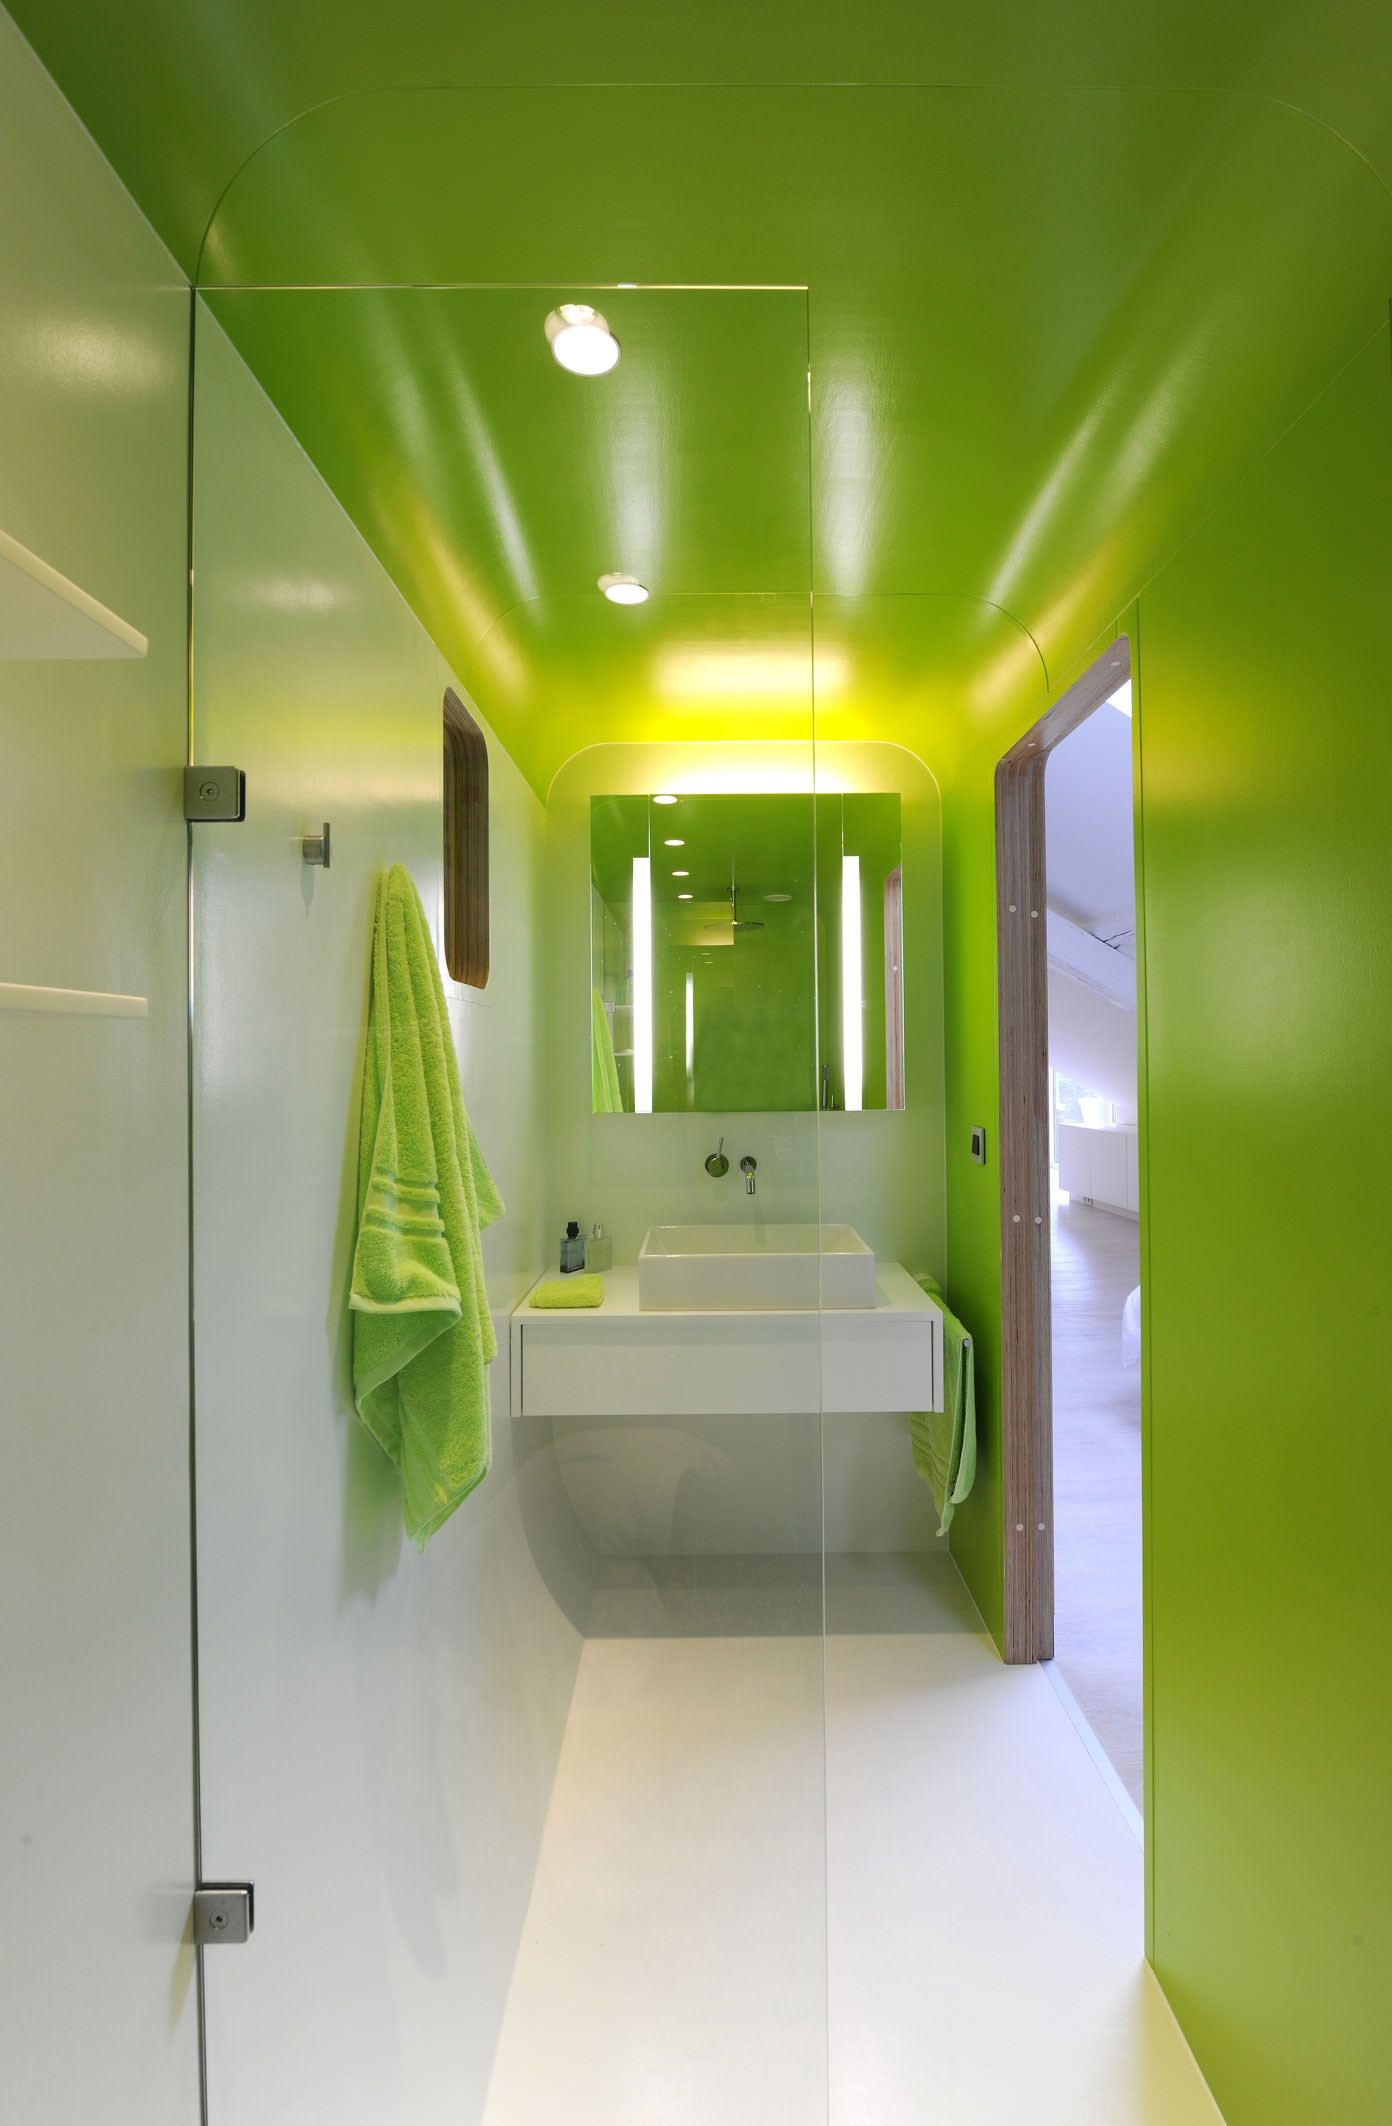 Бнло-зеленая современная ванная комната